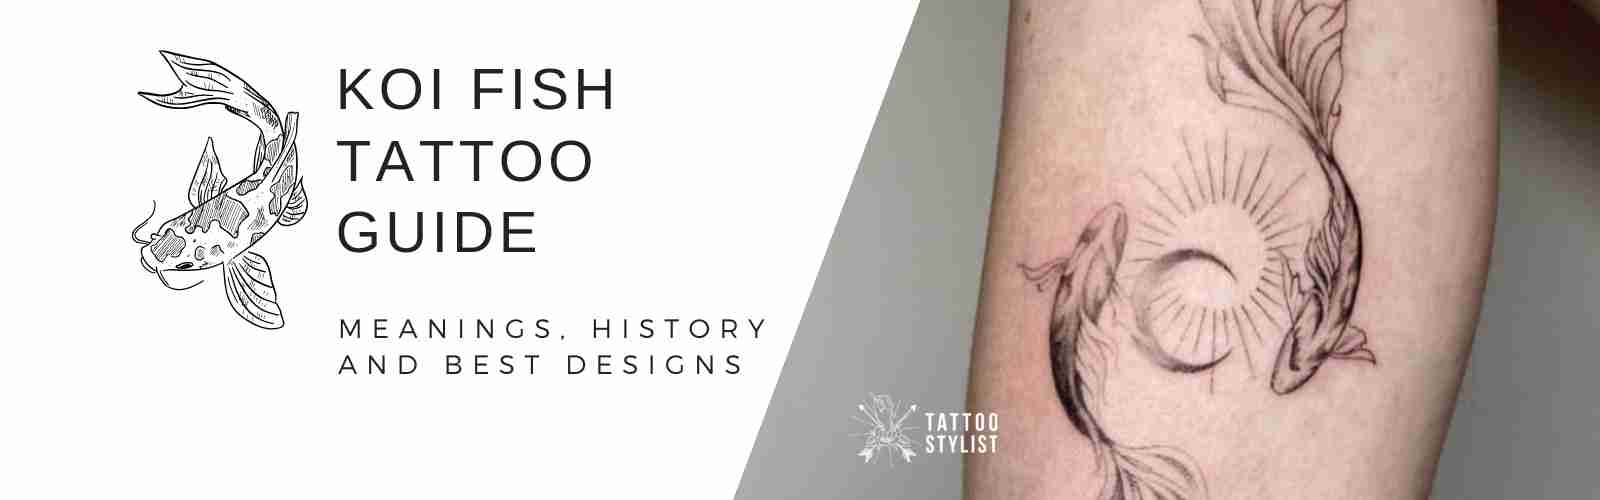 koi fish tattoo featured image